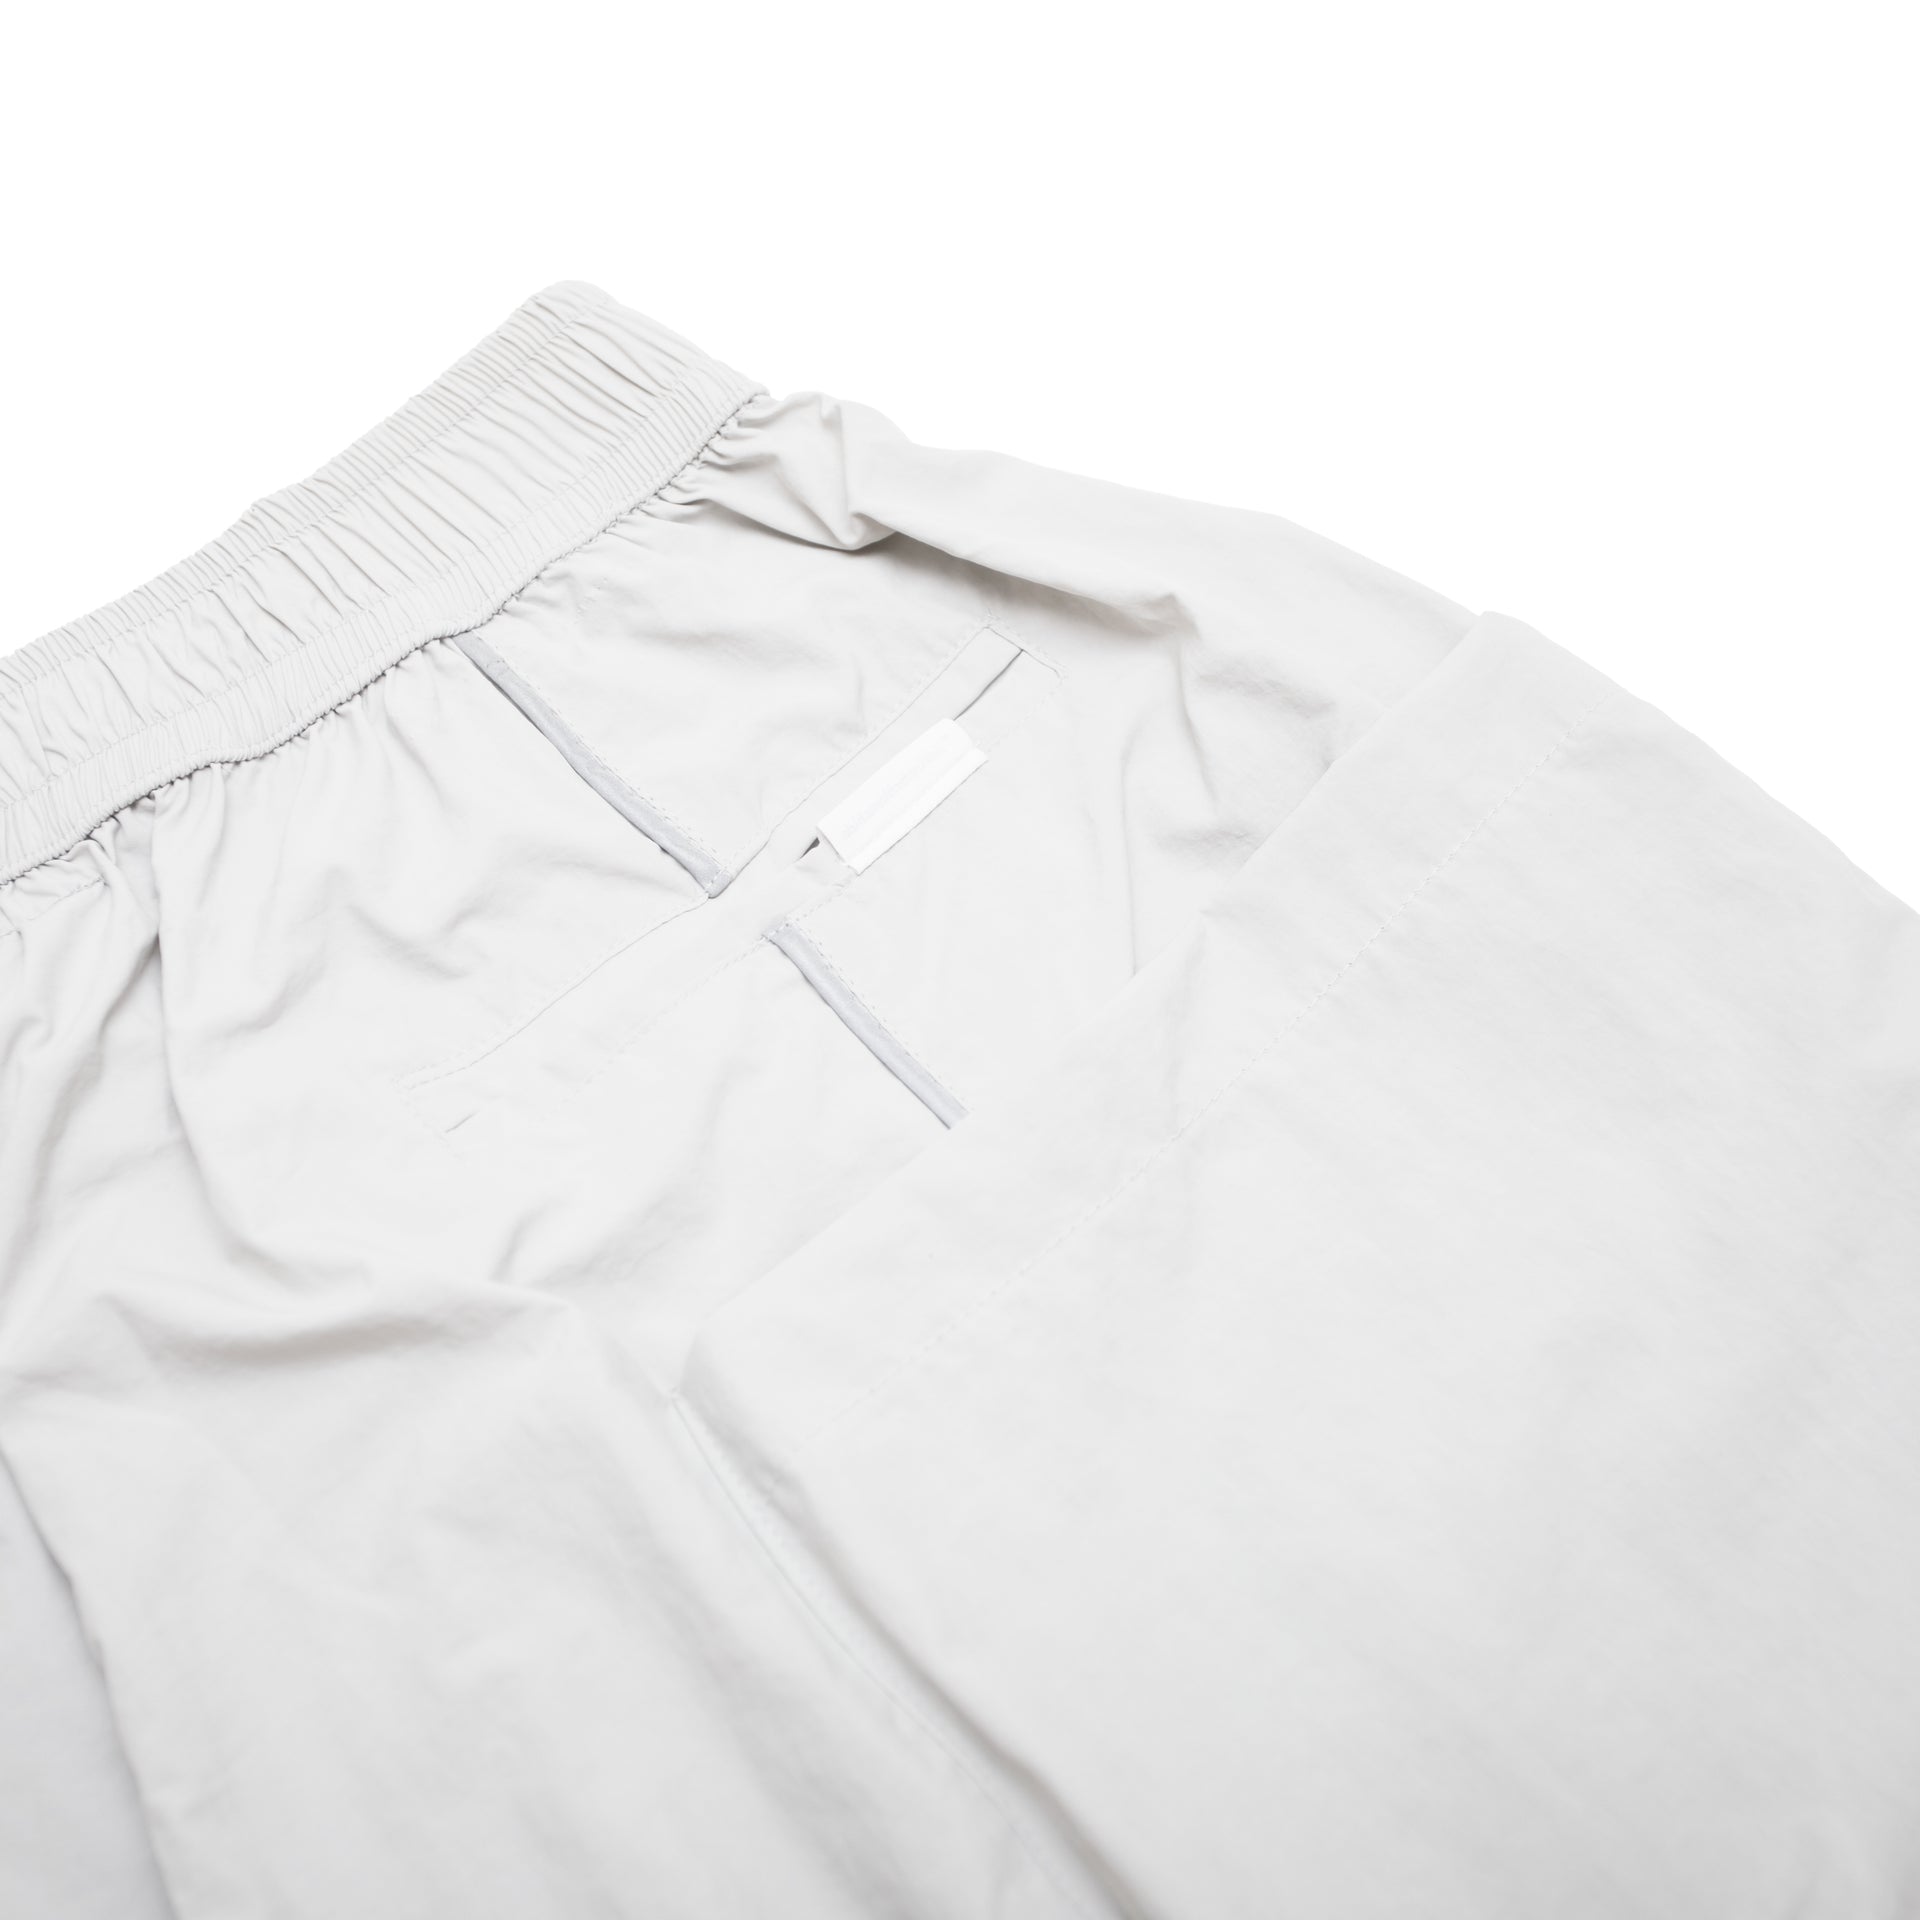 light weight 6-pocket half pants